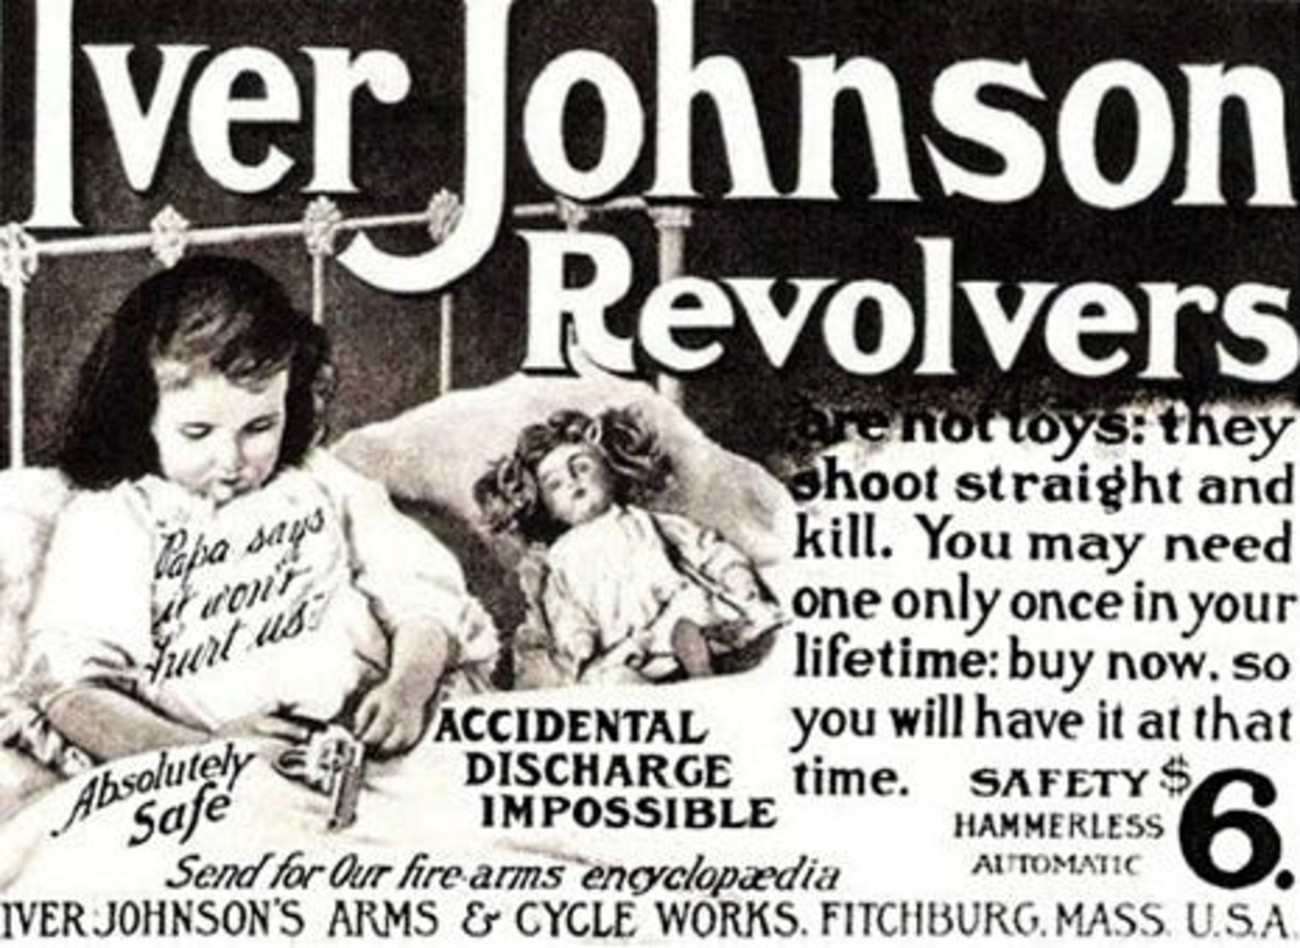 Old gun ad involving kids